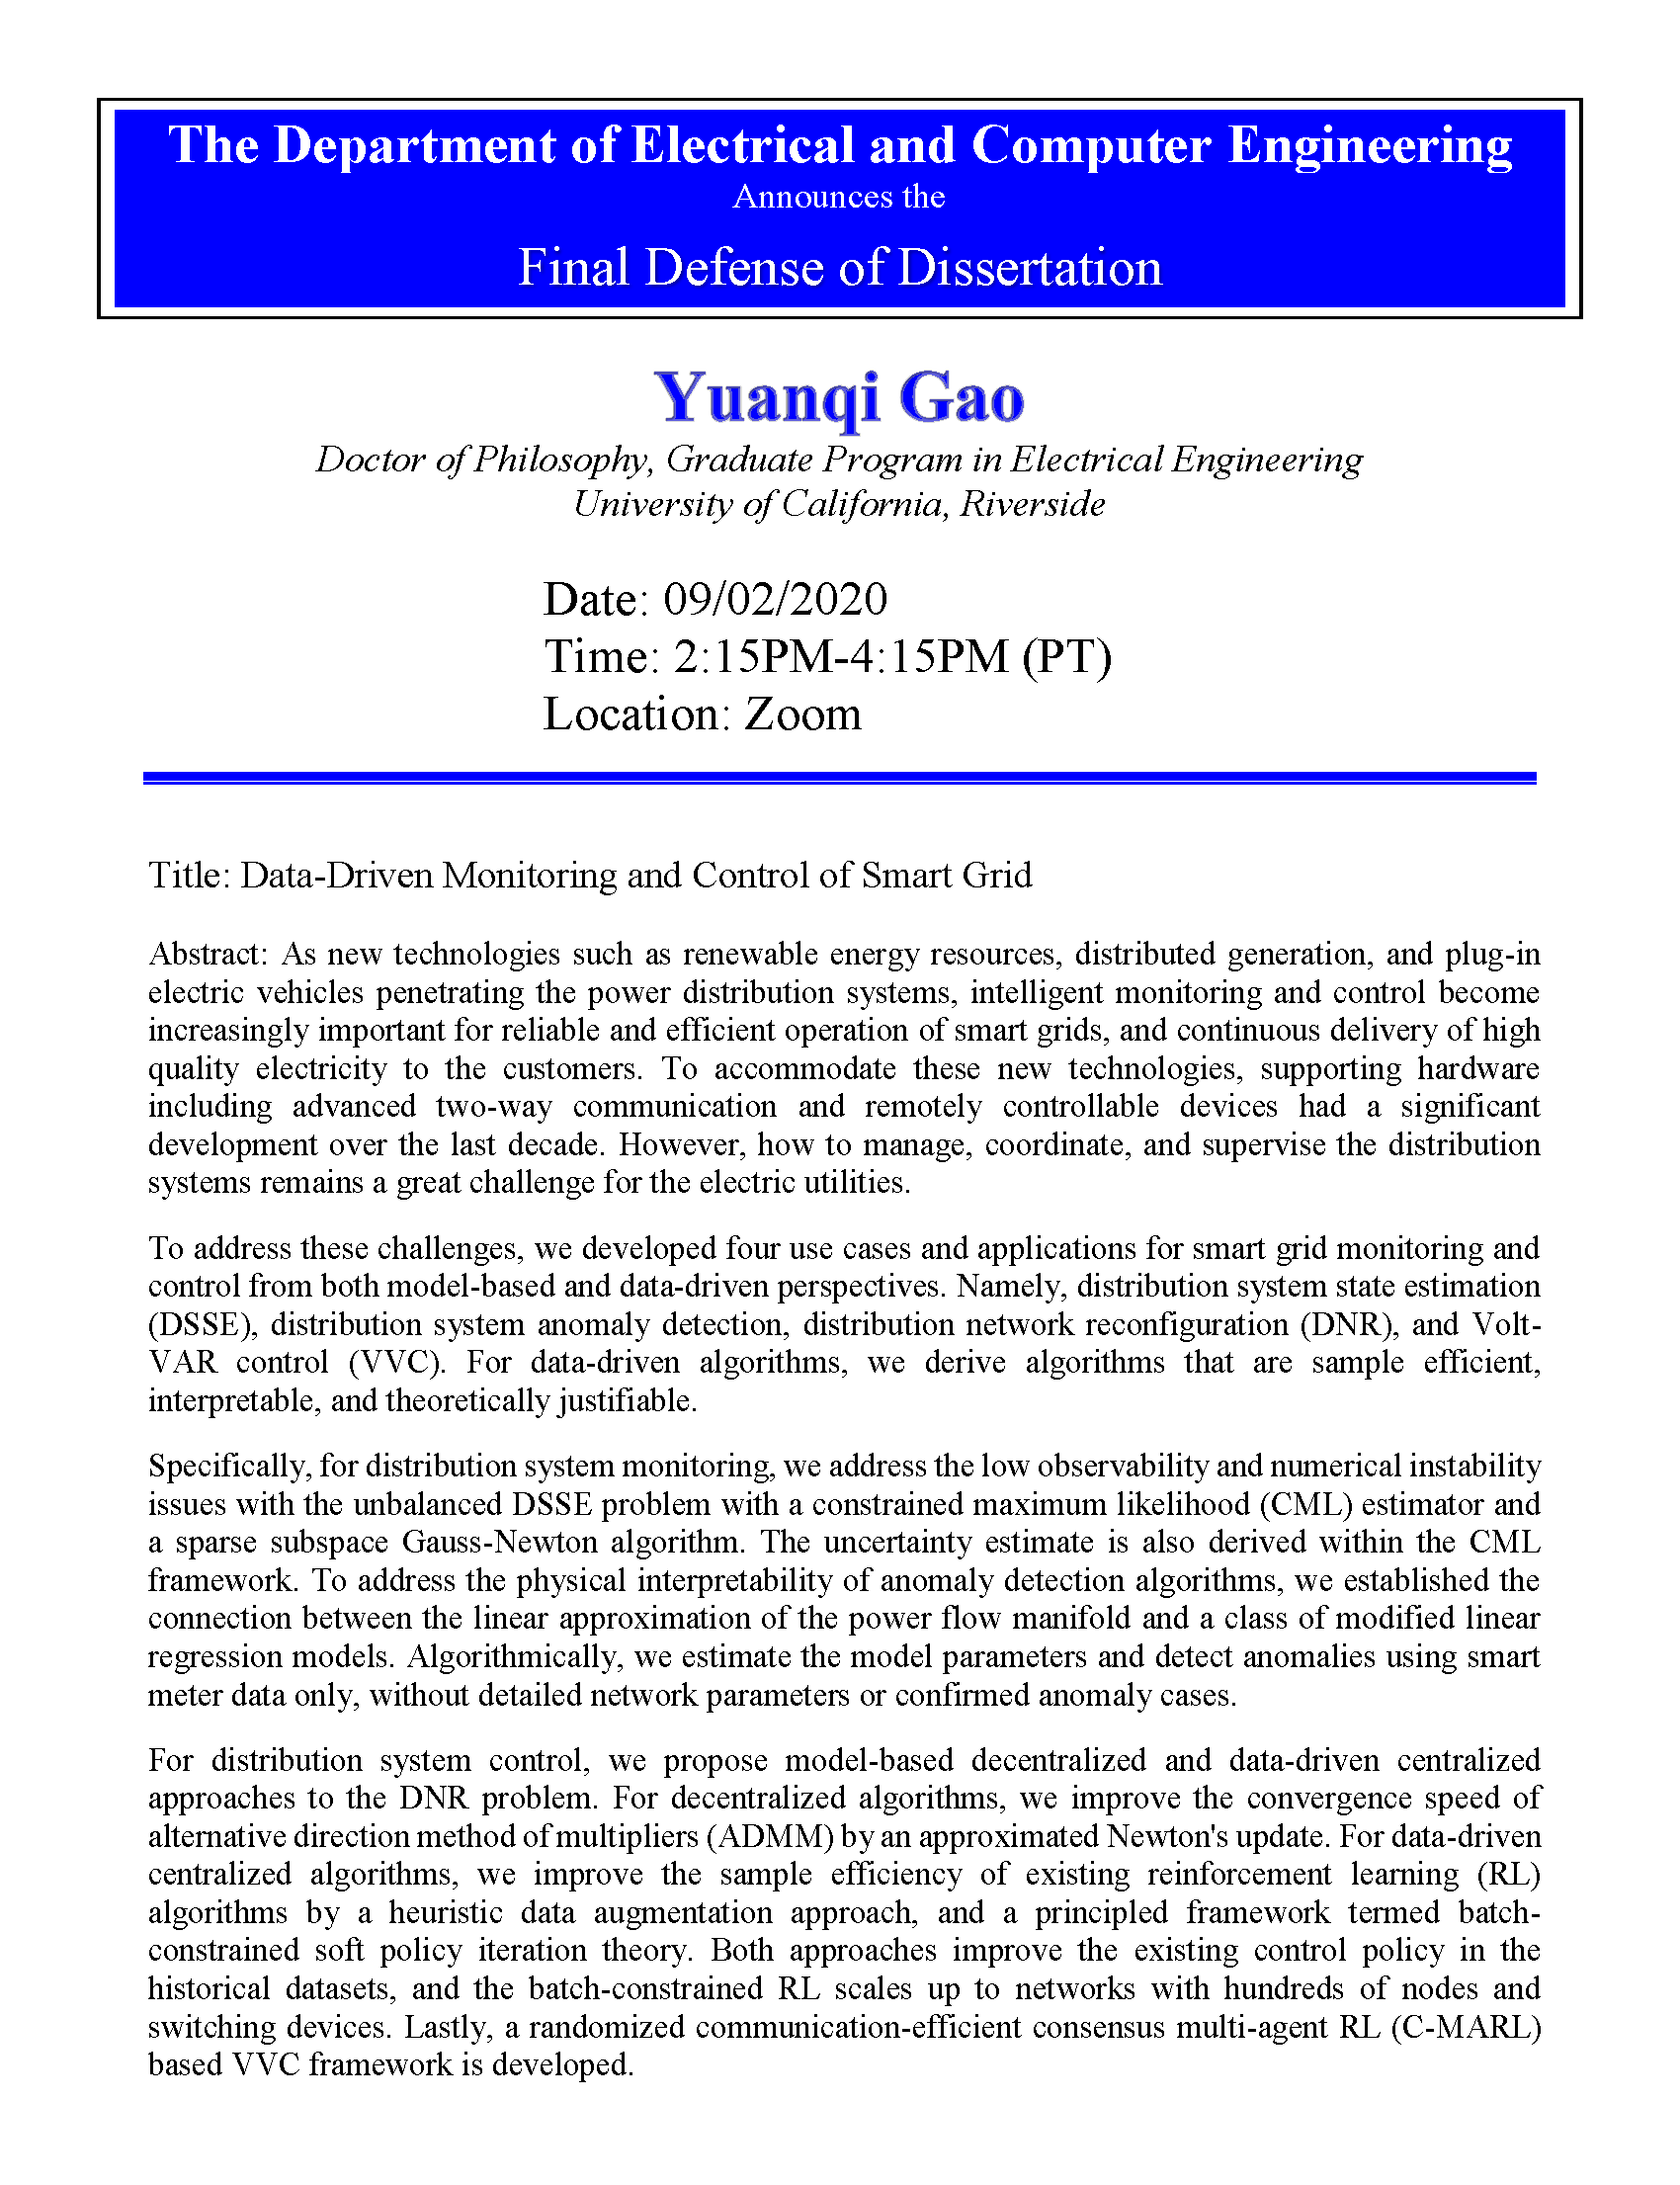 GAO, Yuanqi PhD Dissertation Defense Flyer